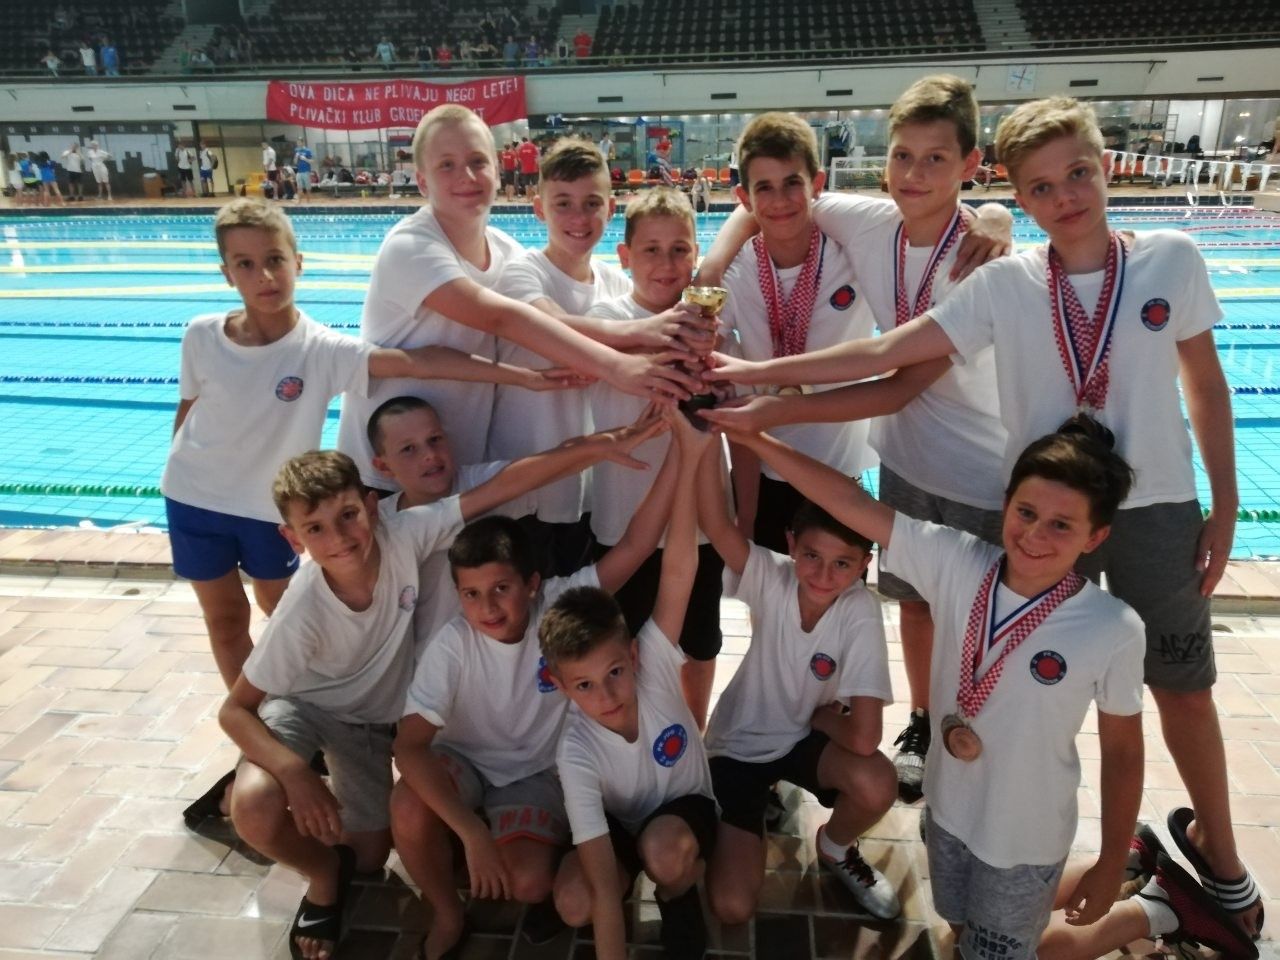 Osvojeno 40 medalja! Veliki uspjeh plivača PK Jug na Regionalnom prvenstvu u Splitu (FOTO)